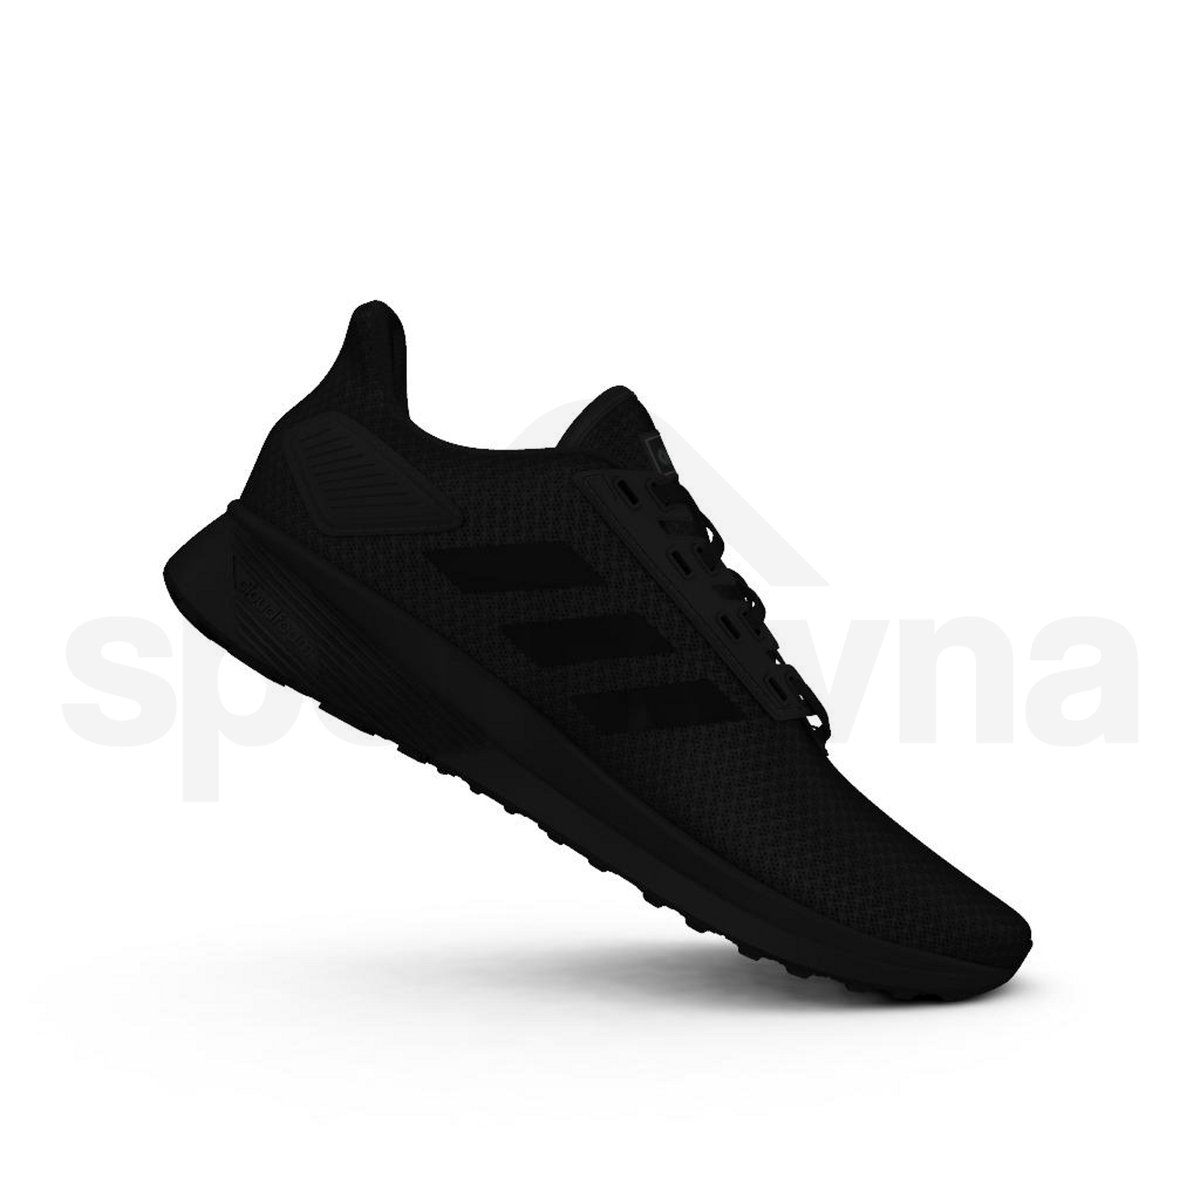 Obuv Adidas Duramo 9 - černá